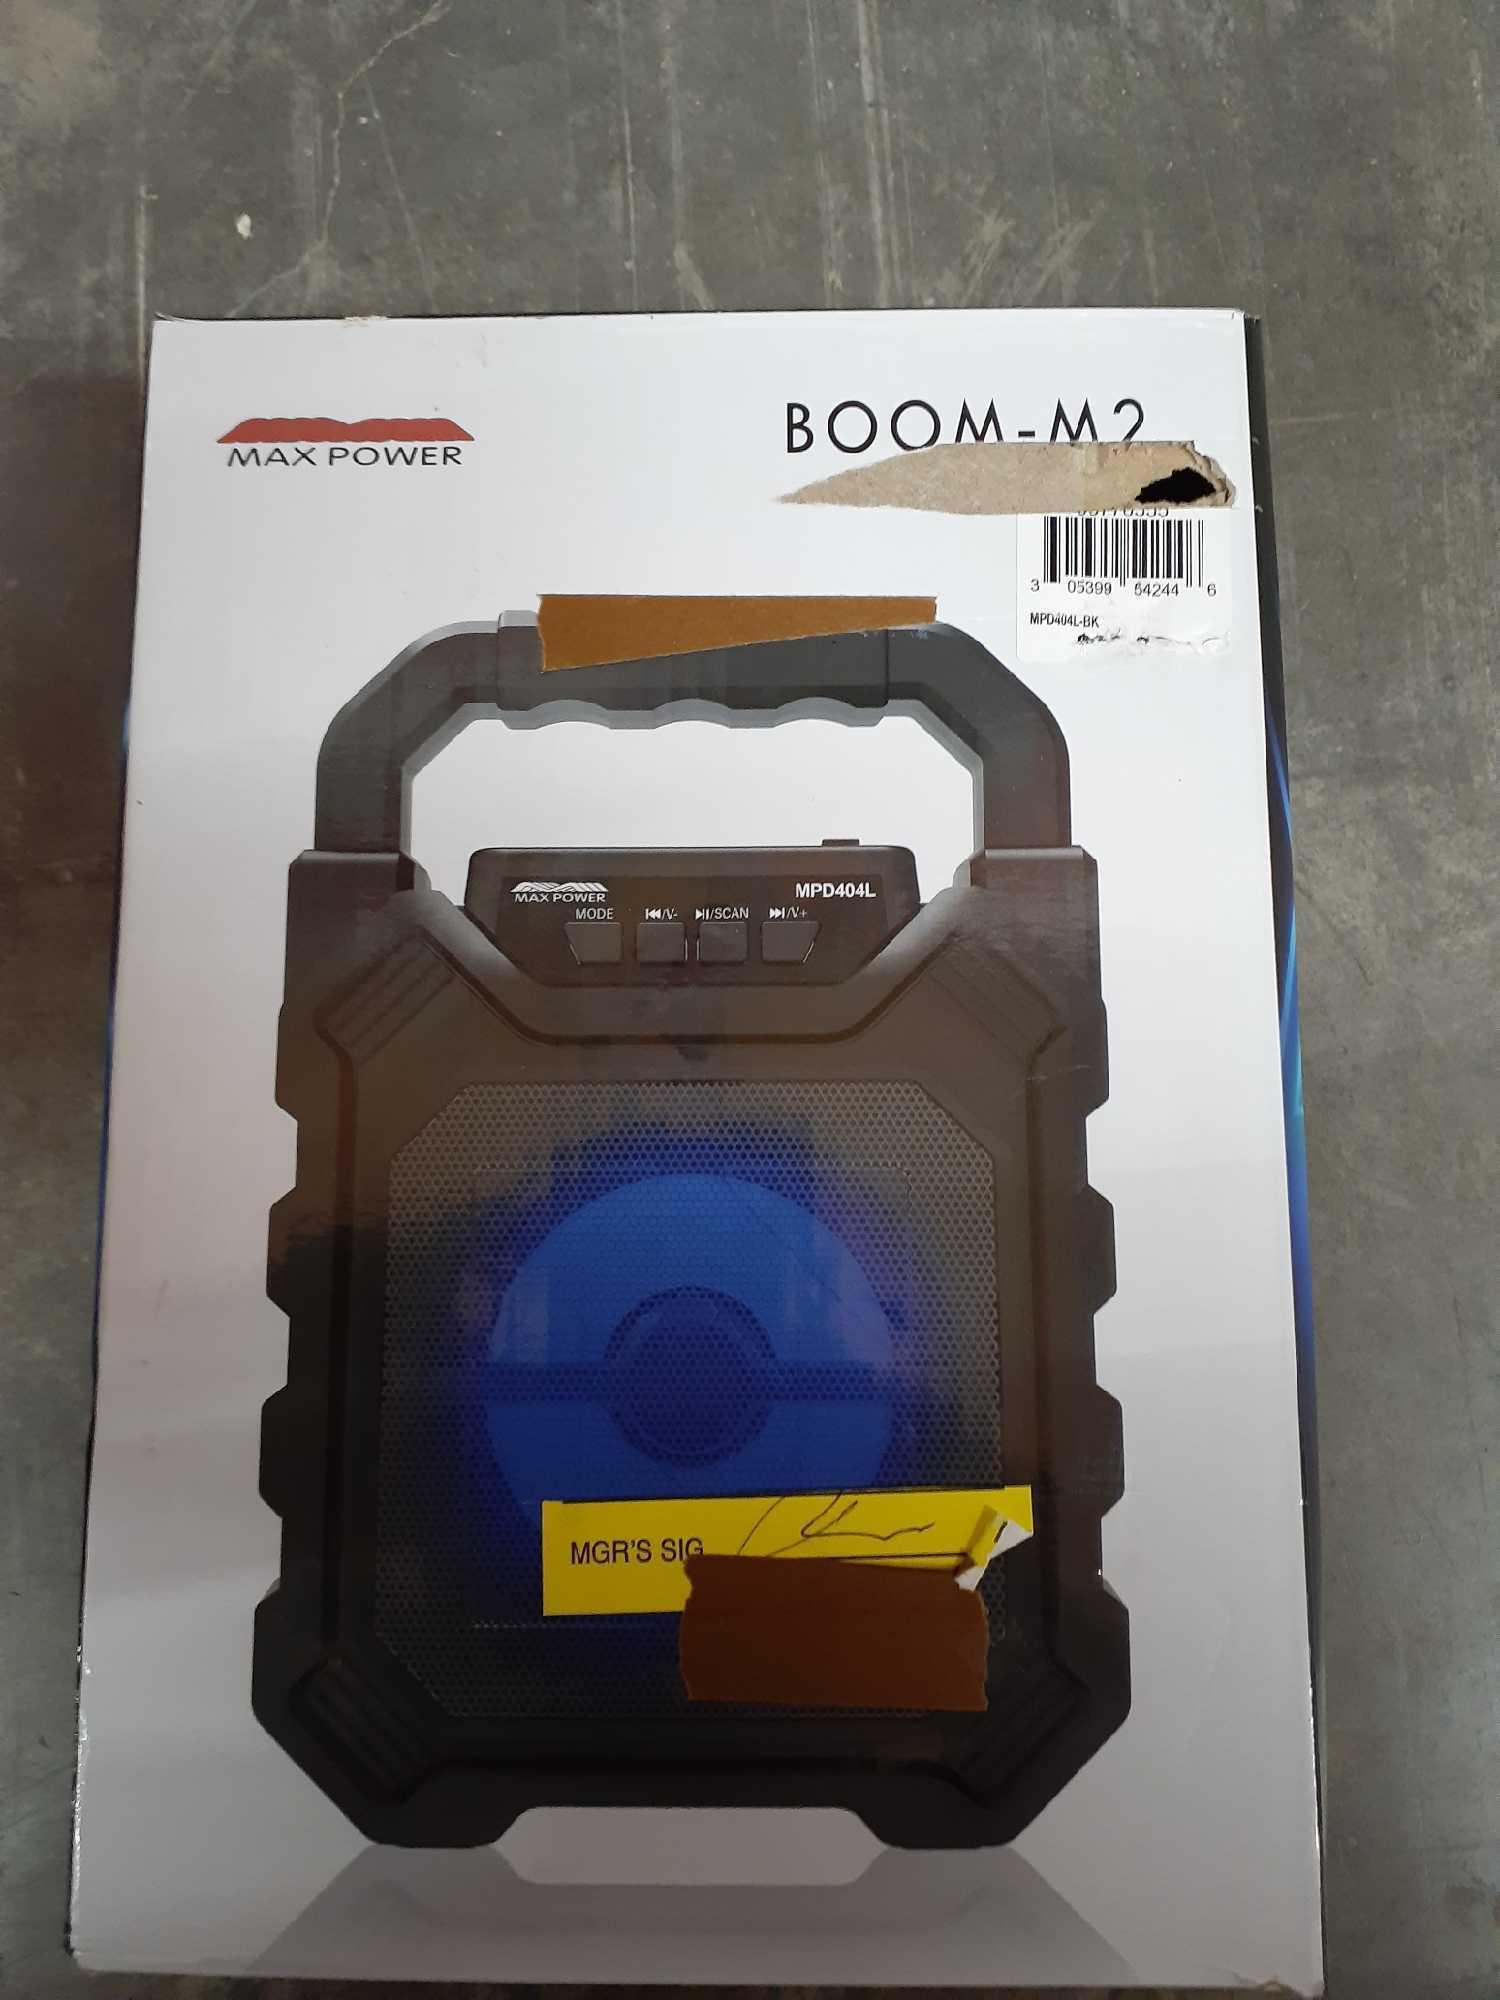 Max Power 4" Portable TWS Bluetooth Speaker - $29.99 MSRP